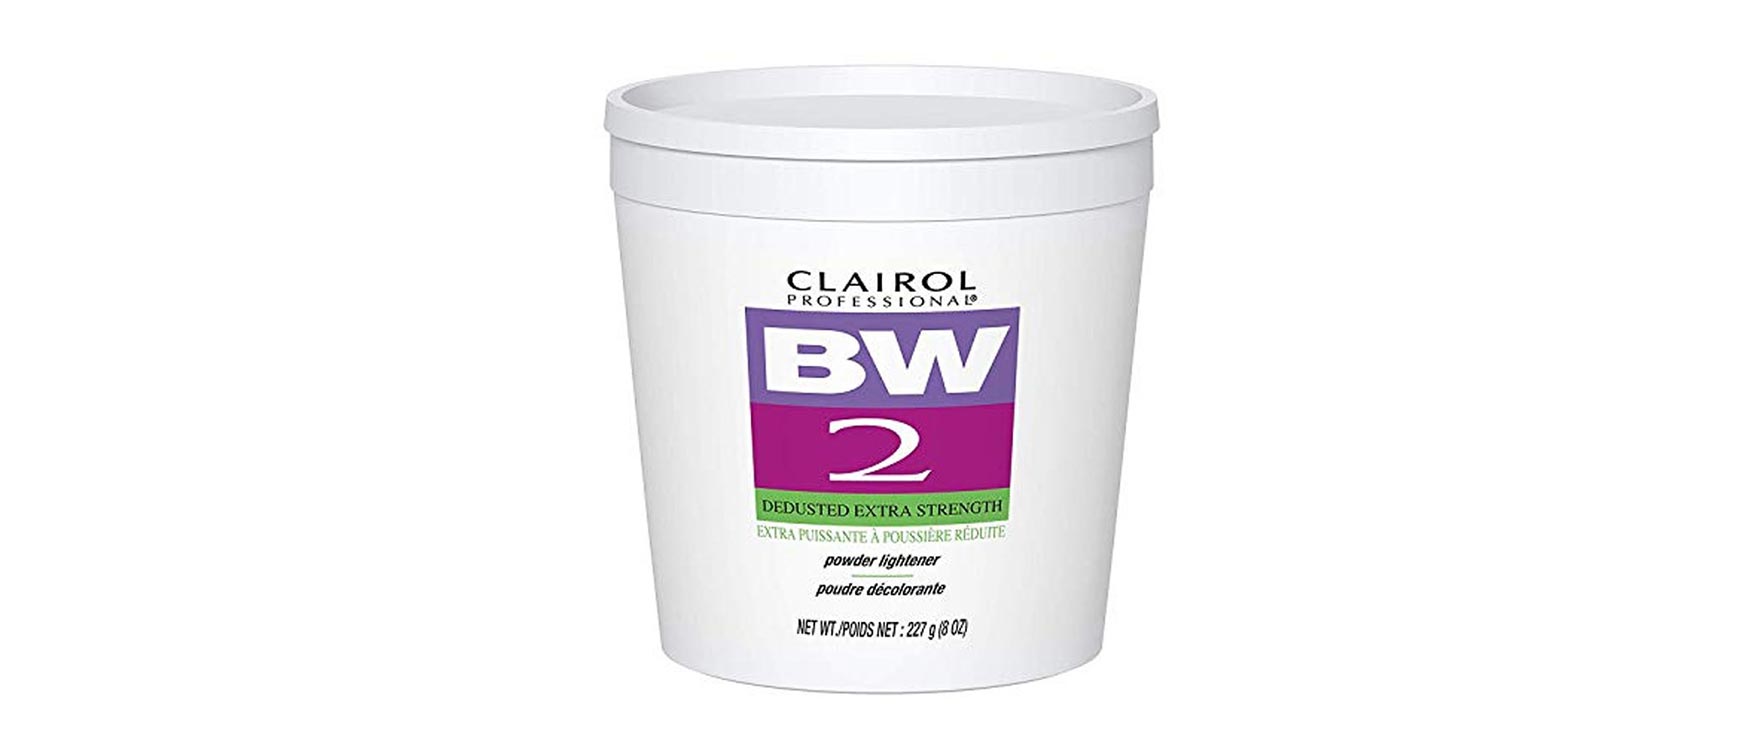 4. Clairol Professional BW2 Hair Powder Light